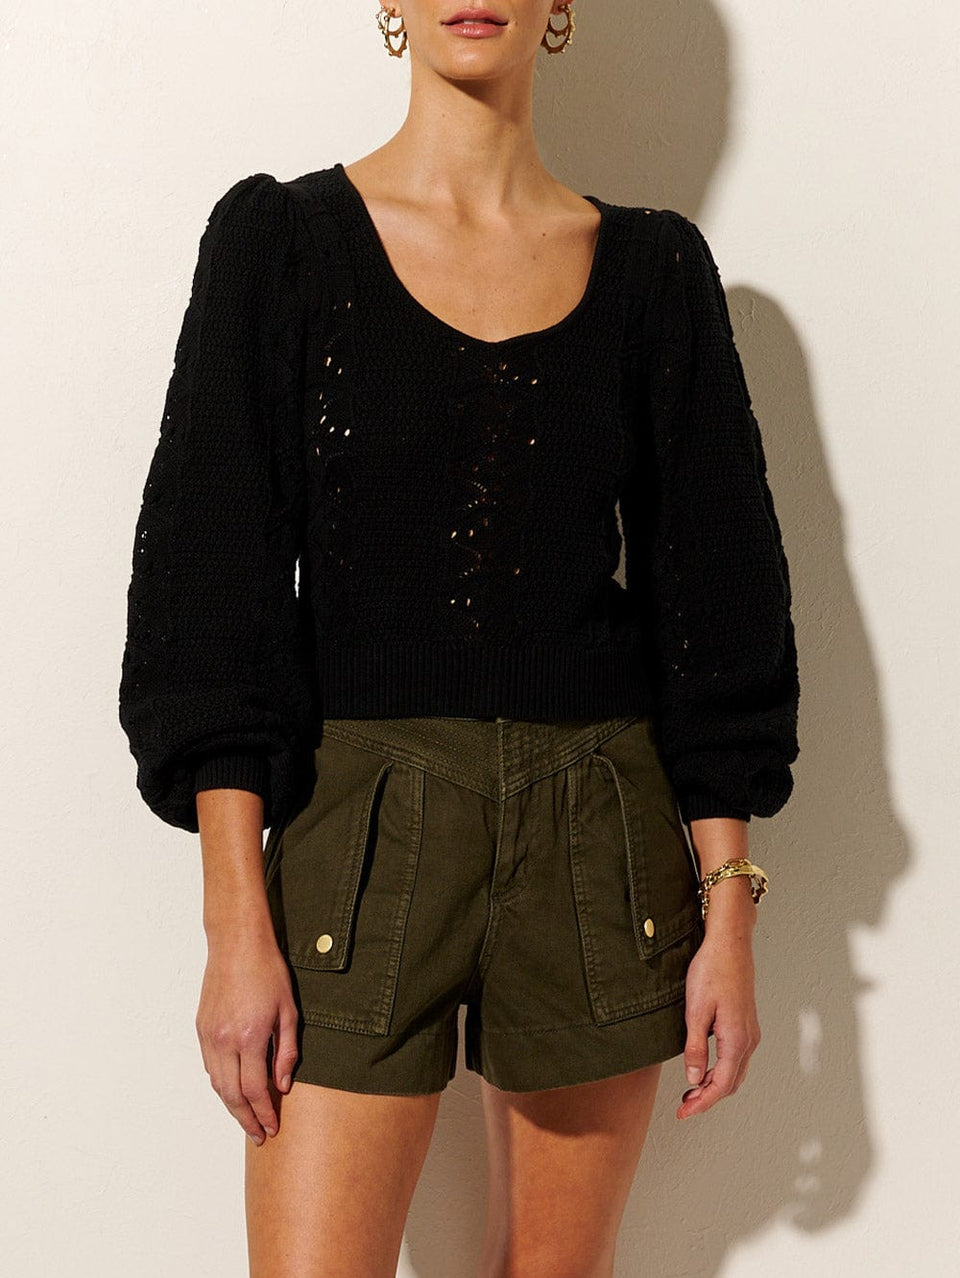 KIVARI Helena Knit Top | Model wears Black Knit Top